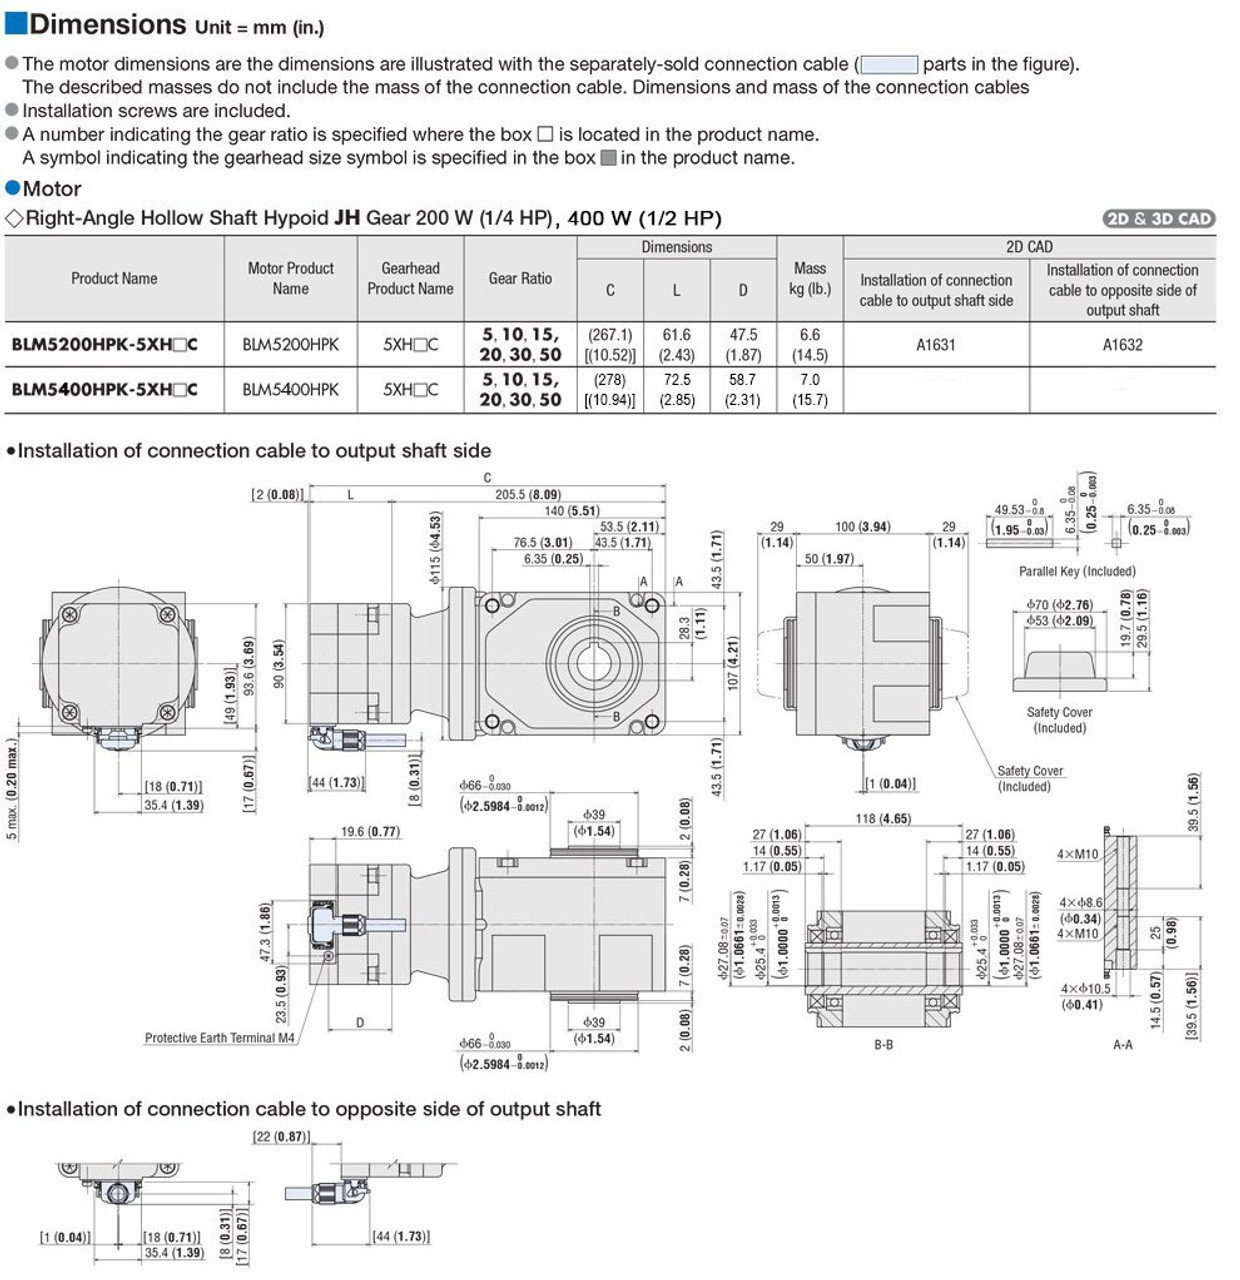 BLM5400HPK-5XH10C - Dimensions